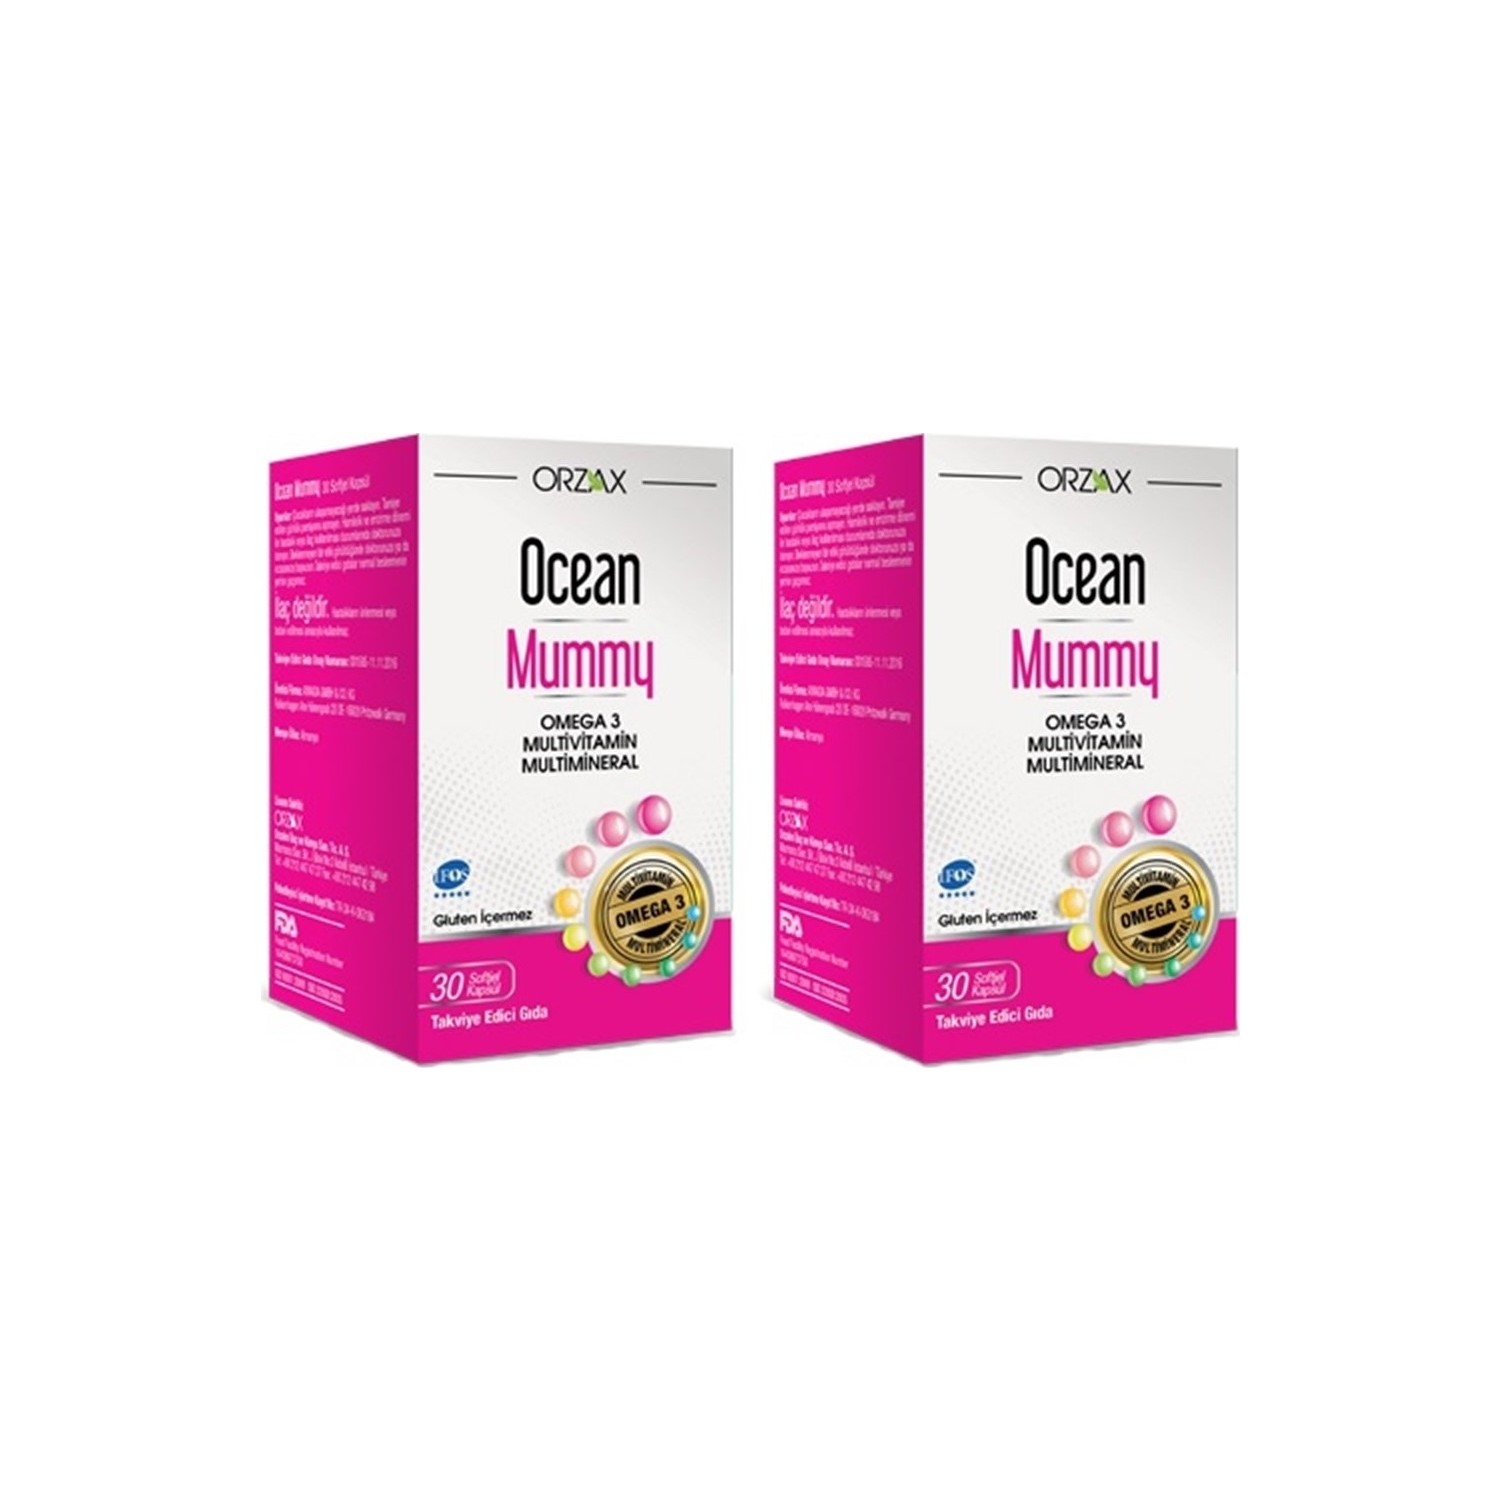 Мультивитамин Омега-3 Ocean Mummy, 2 упаковки по 30 капсул пищевая добавка orzax ocean mummy multivitamin multimineral 30 капсул